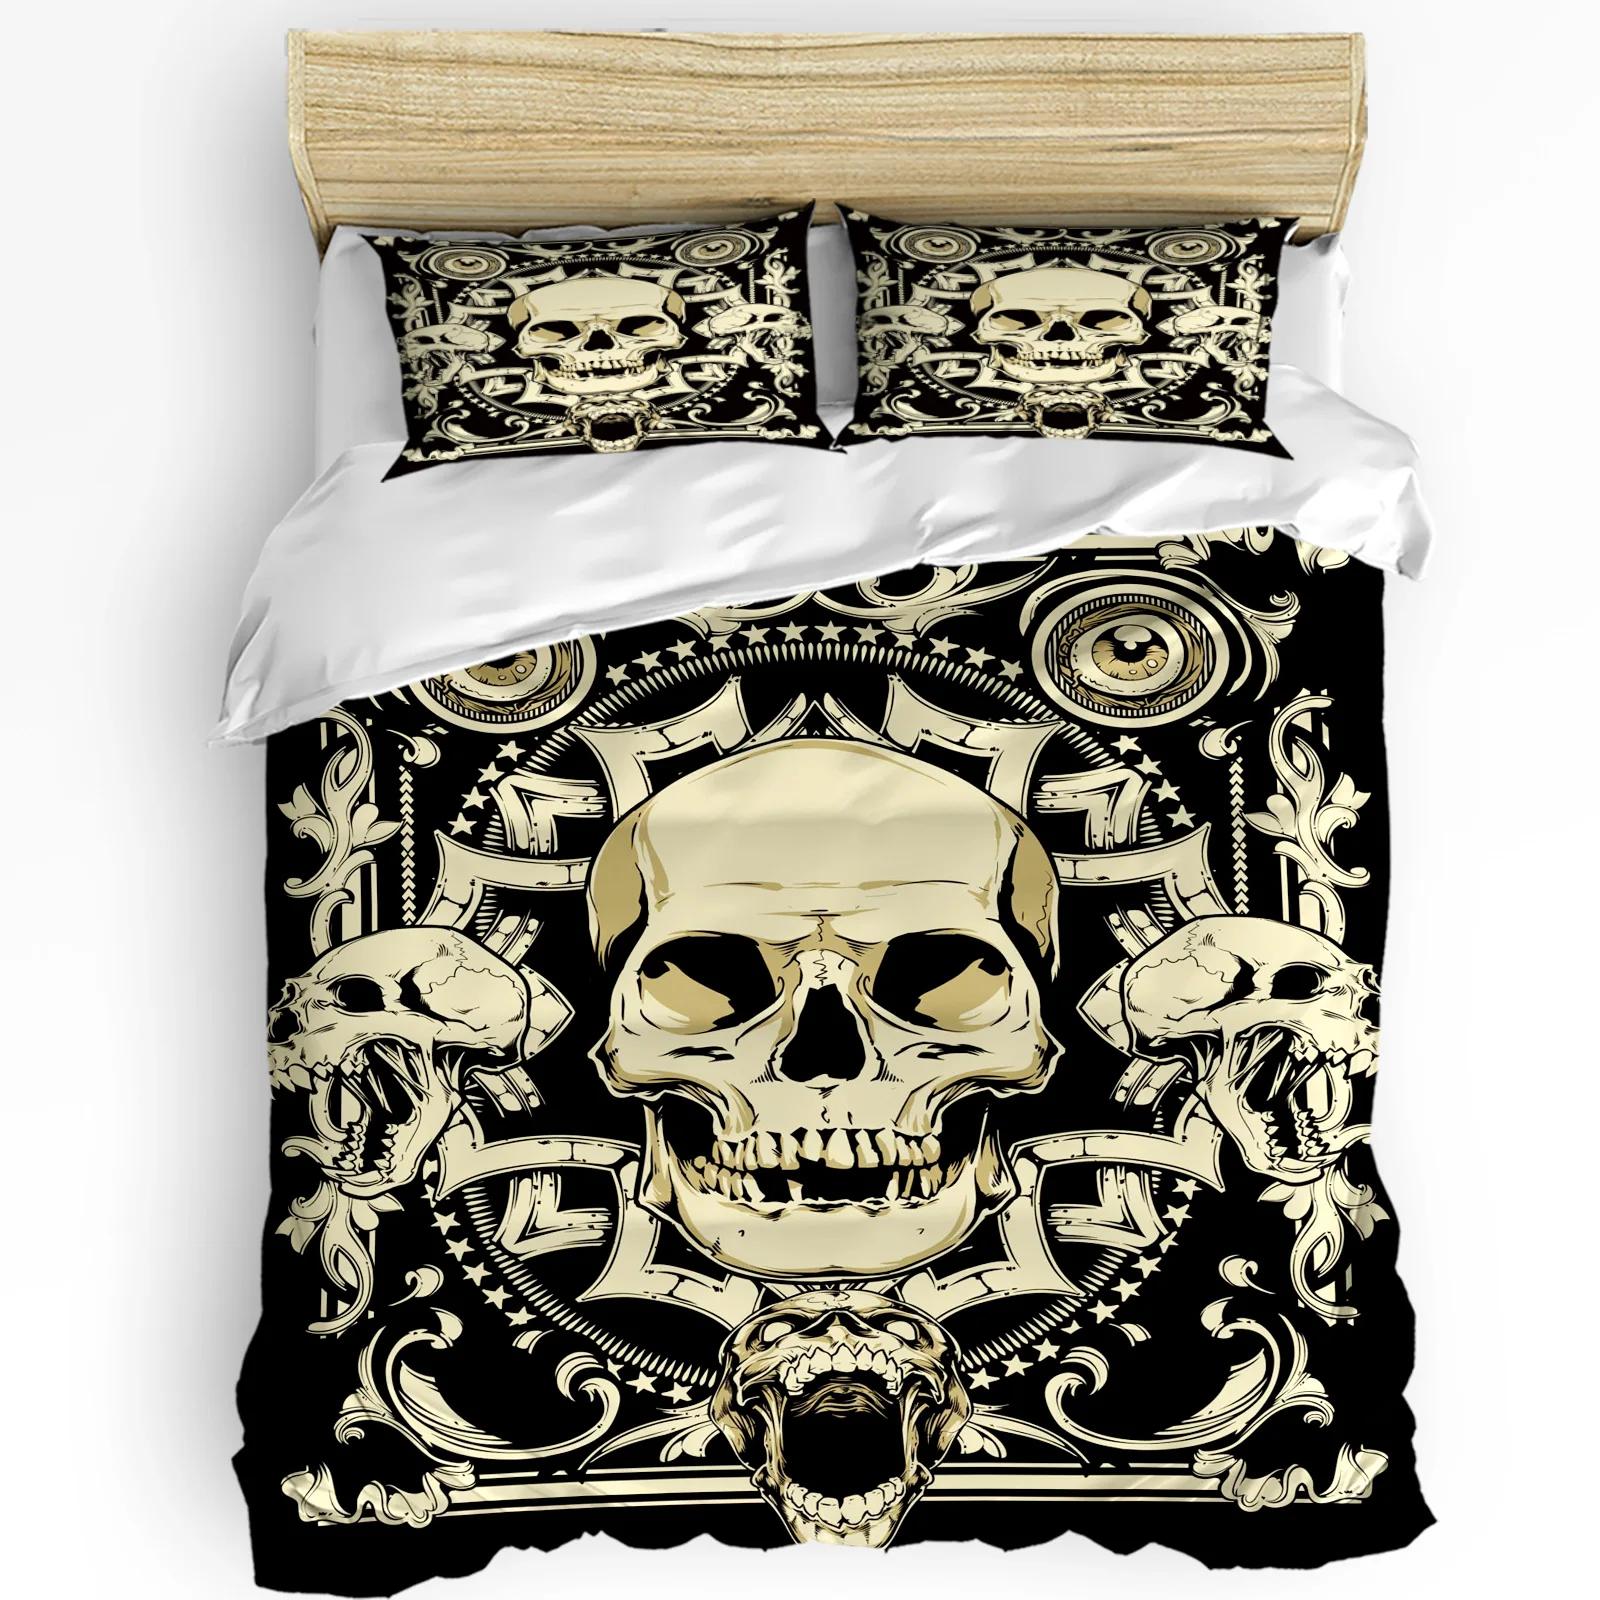 Terror Skull Bedding Set 3pcs Boys Girls Duvet Cover Pillowcase Kids Adult Quilt Cover Double Bed Set Home Textile